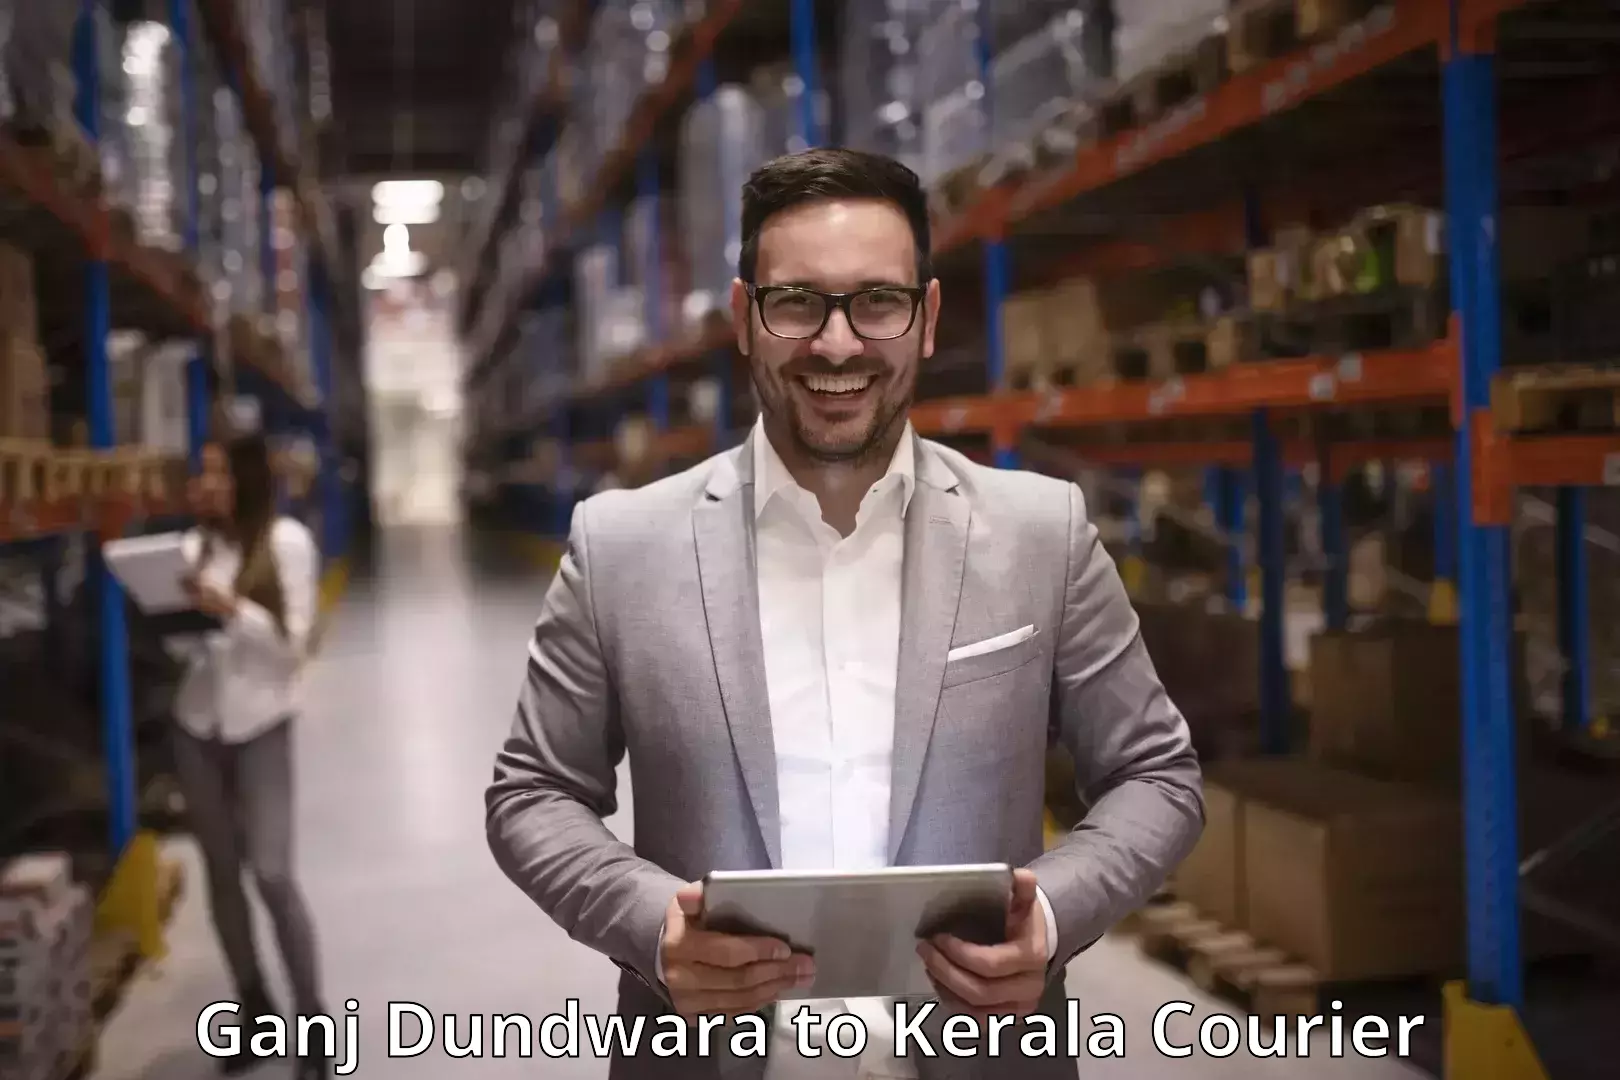 International courier networks Ganj Dundwara to Kerala